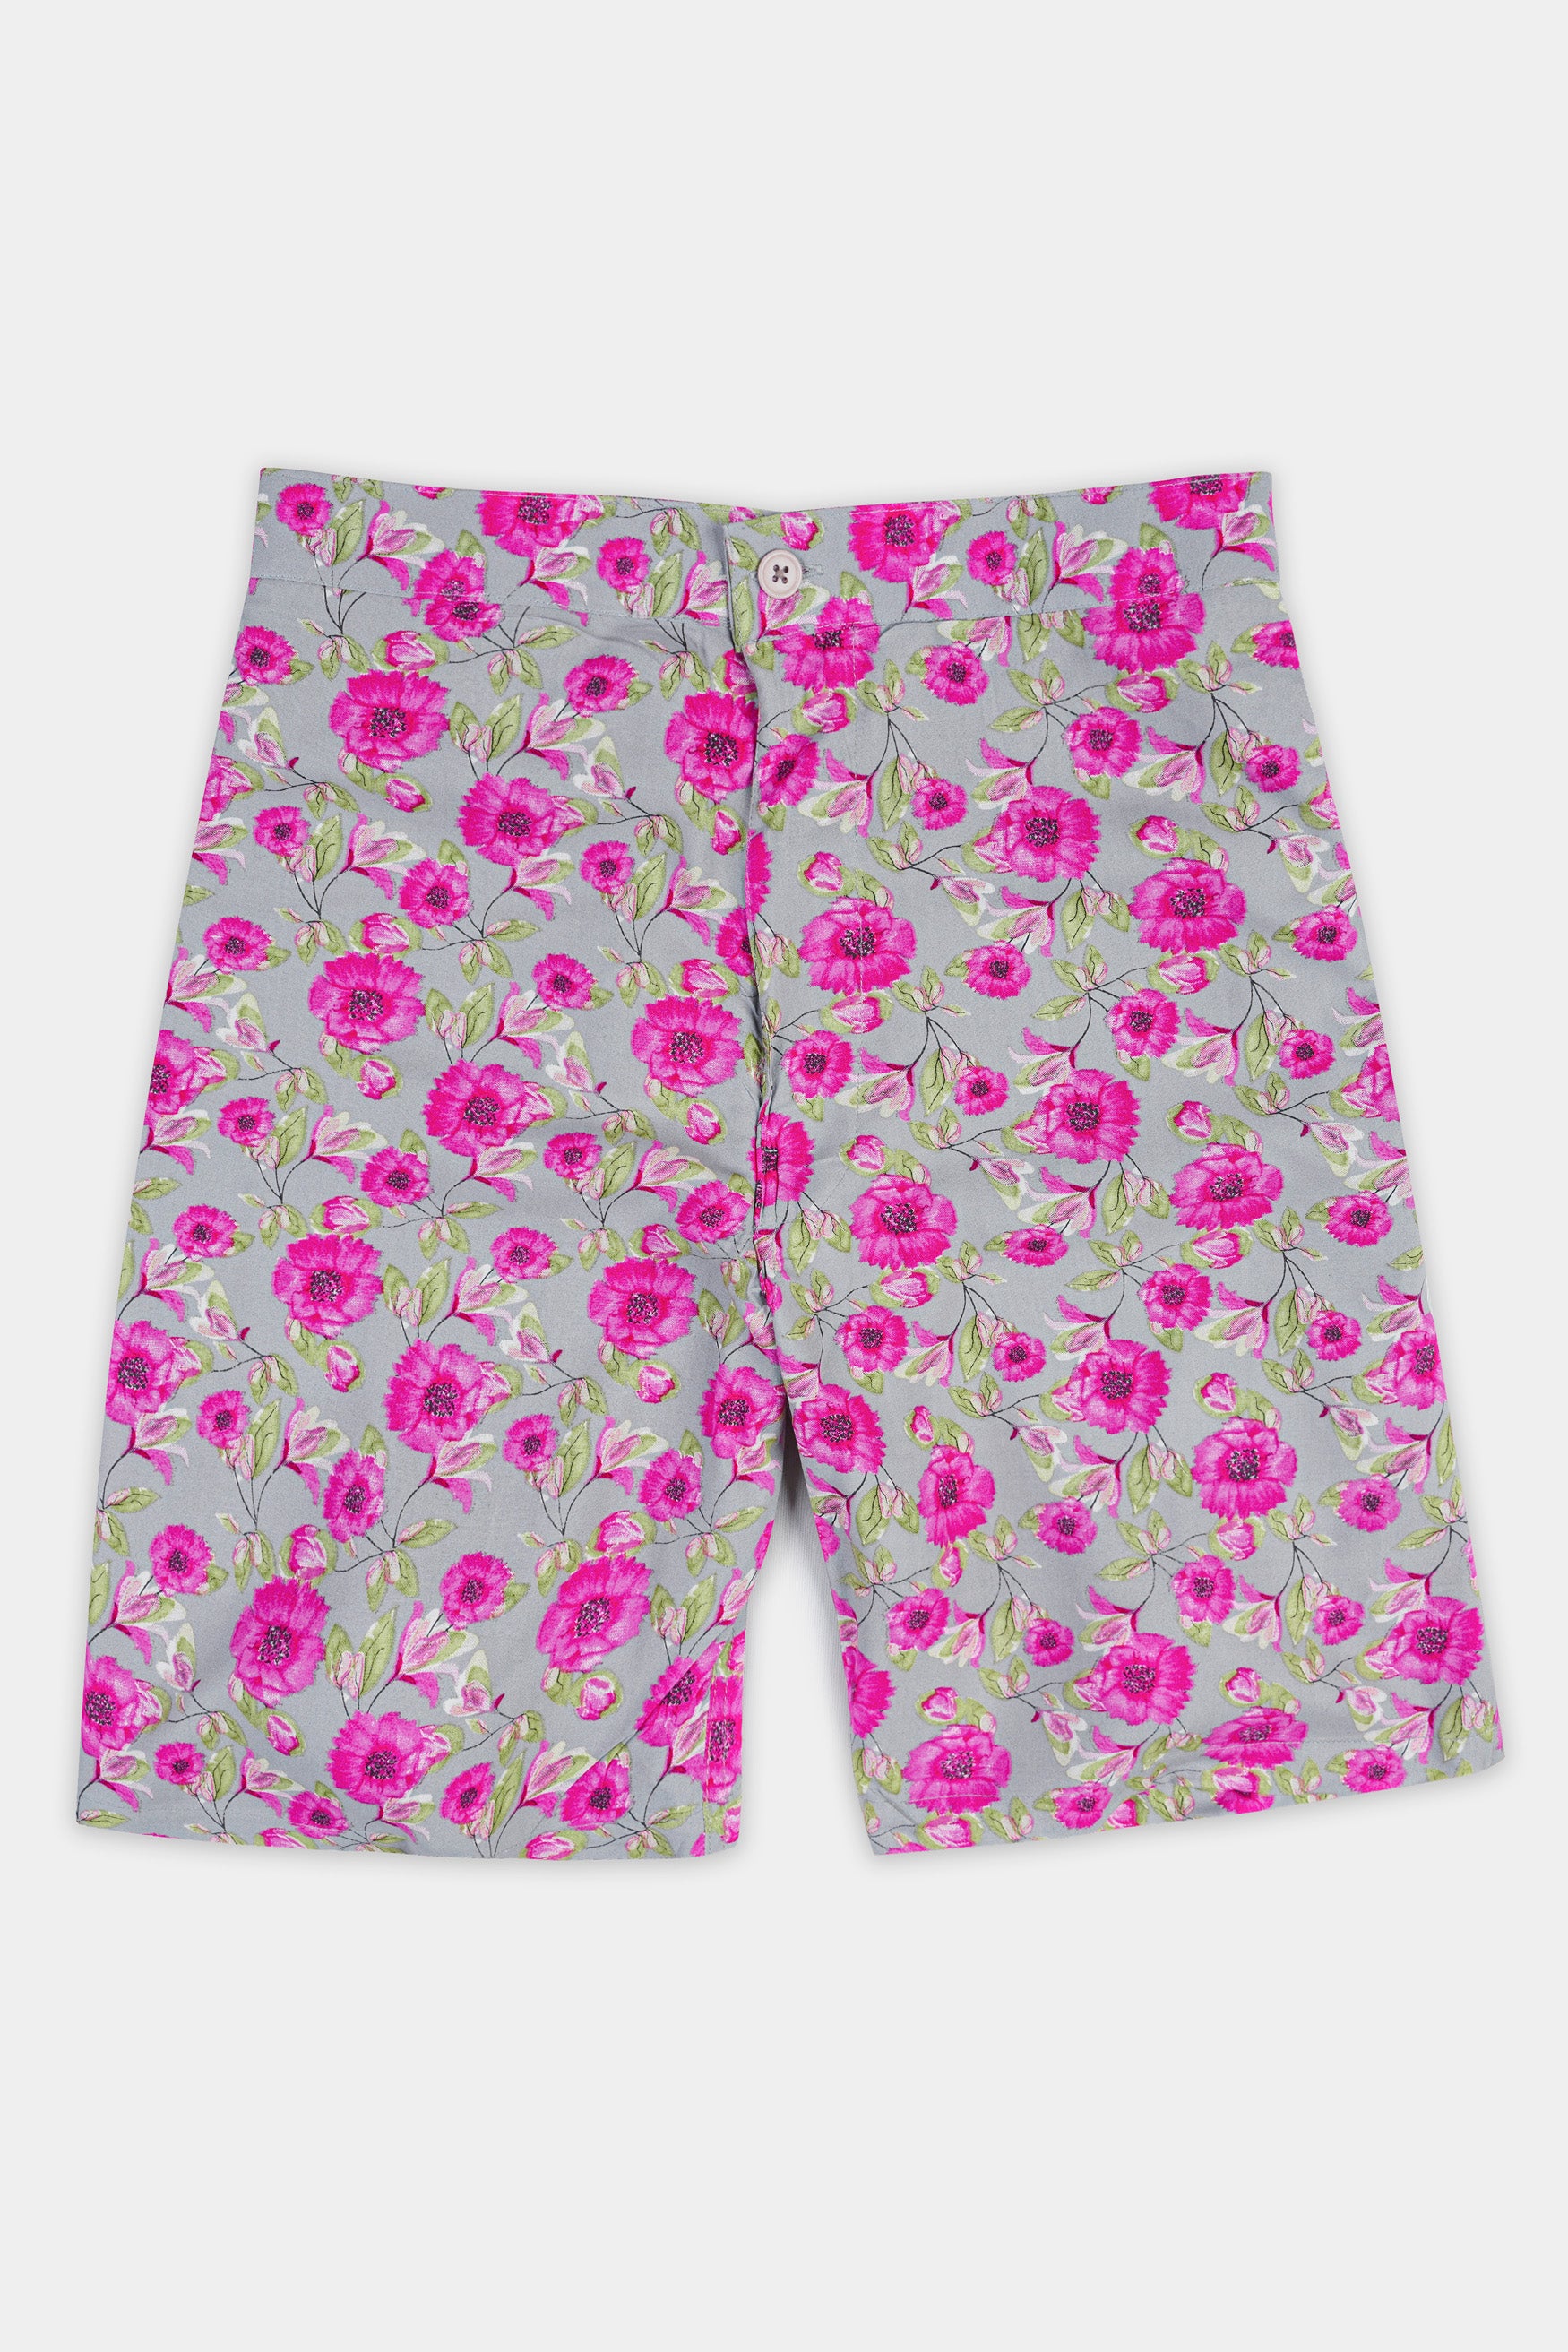 Noble Gray with Hopbush Pink Multicolor Floral Printed Premium Tencel Shorts SR369-28, SR369-30, SR369-32, SR369-34, SR369-36, SR369-38, SR369-40, SR369-42, SR369-44